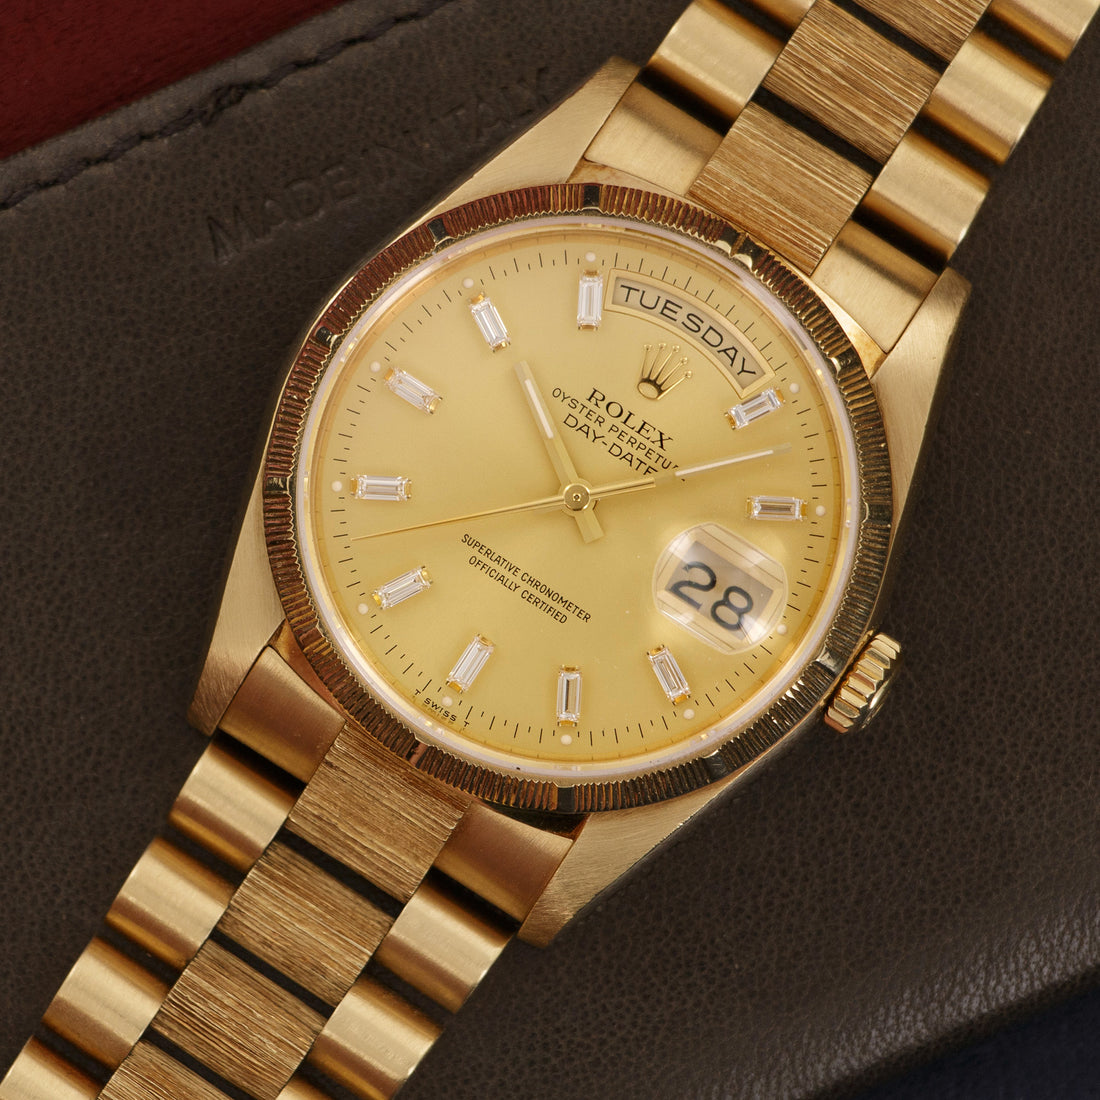 Rolex Day-Date Yellow Gold Bark Finish Baguette Diamond Watch Ref. 18248